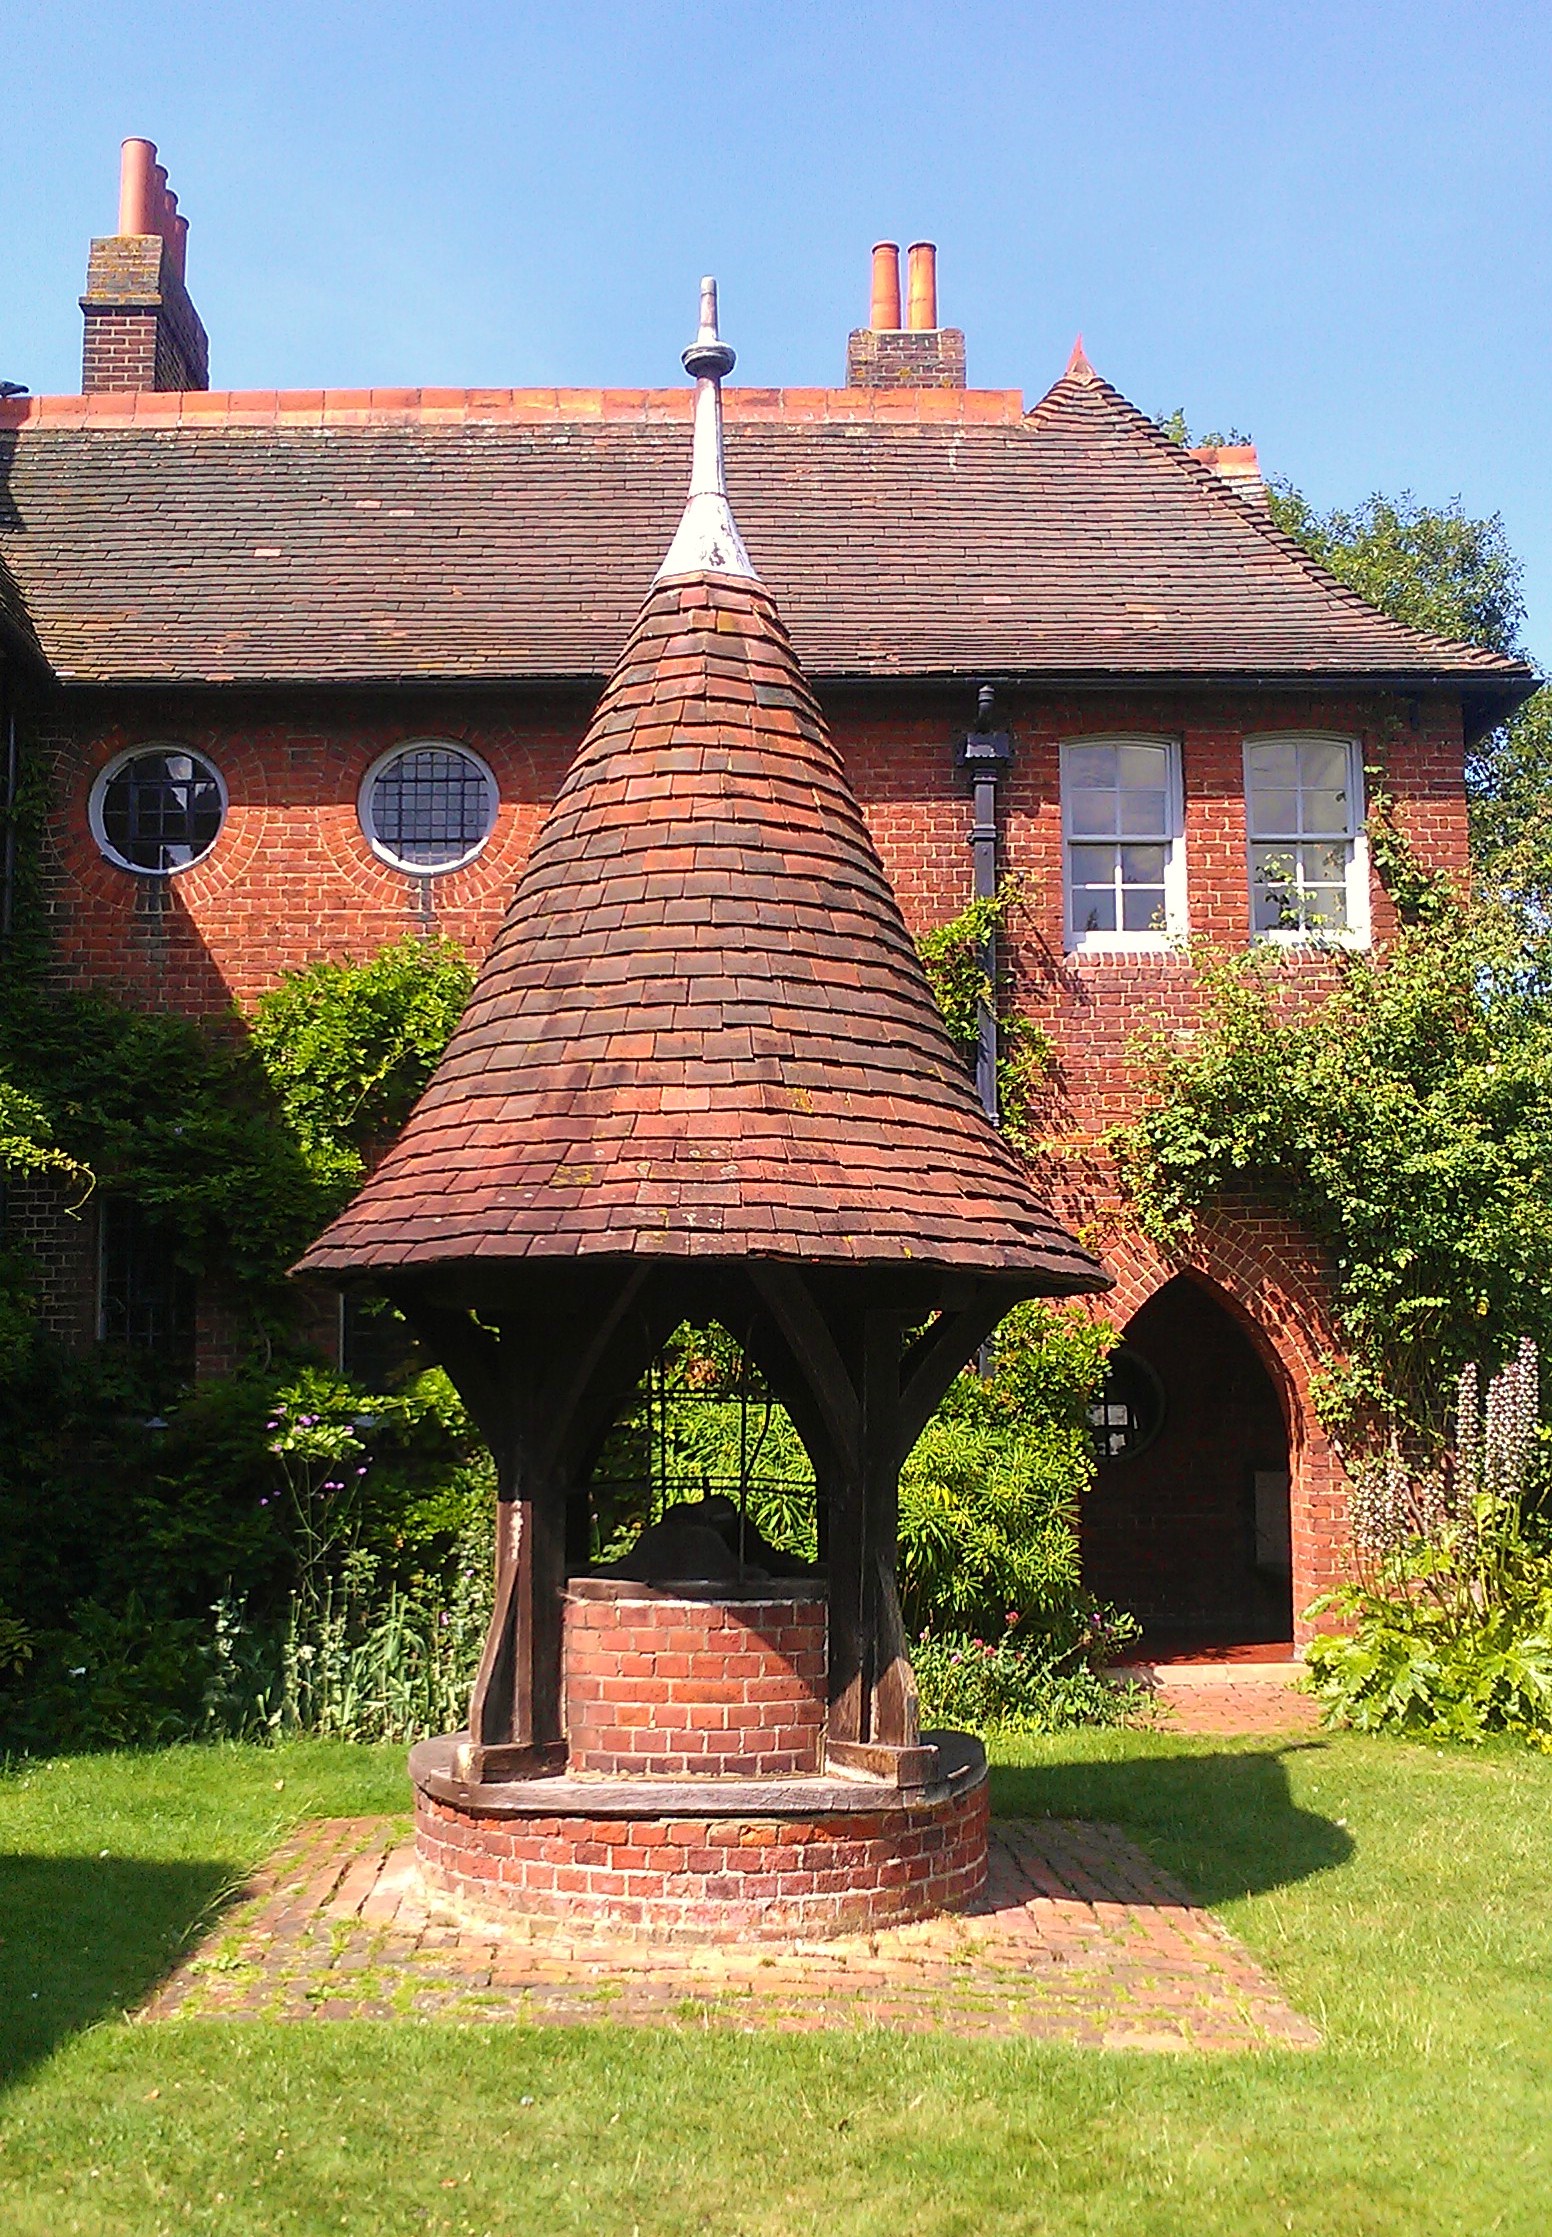 File:The well William Morris' Red House.jpg - Wikimedia